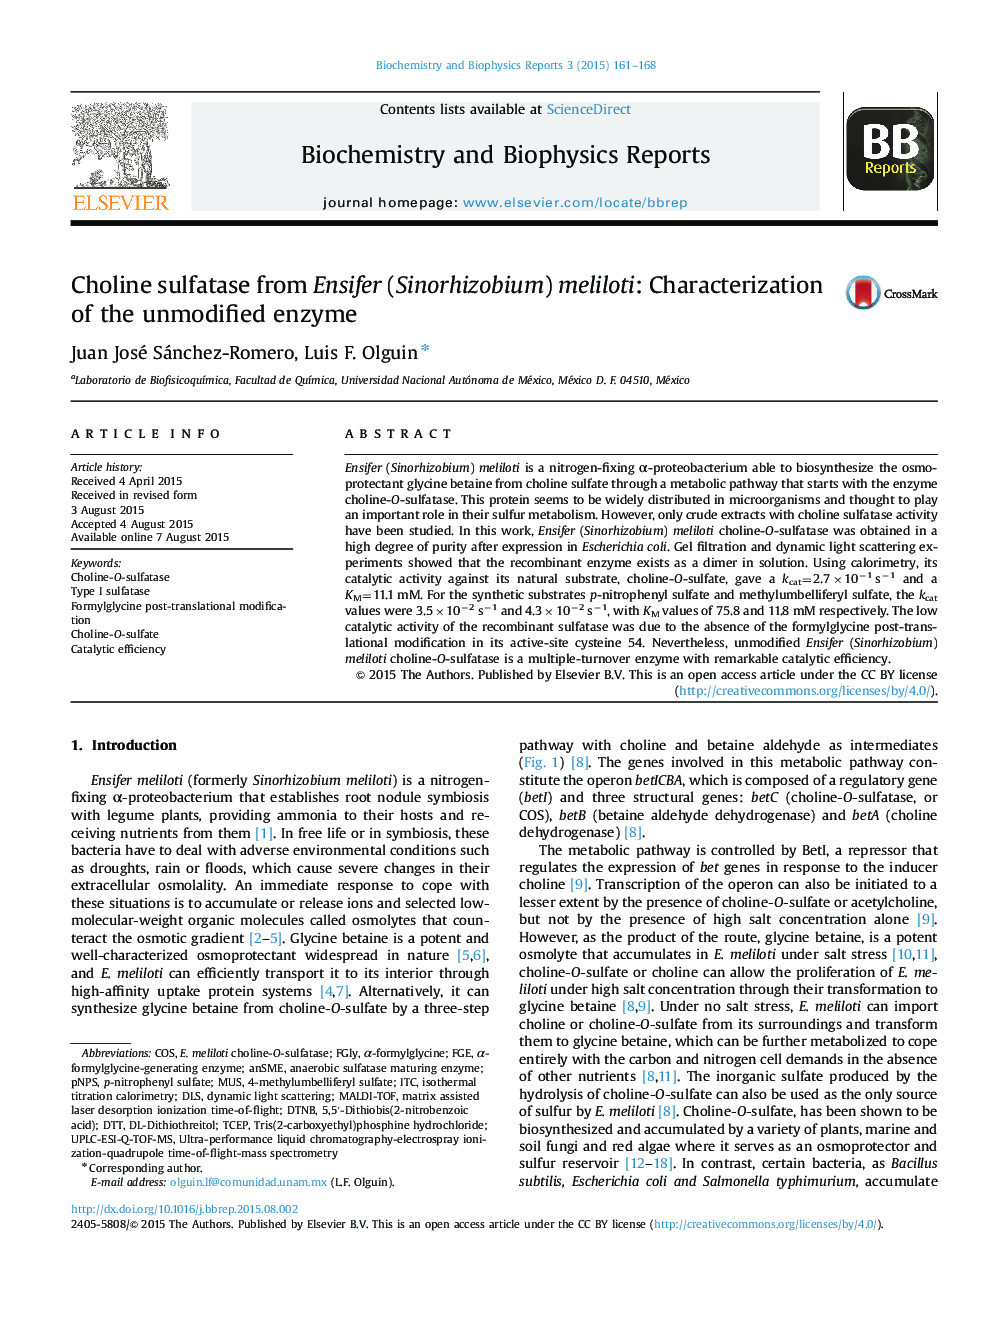 Choline sulfatase from Ensifer (Sinorhizobium) meliloti: Characterization of the unmodified enzyme